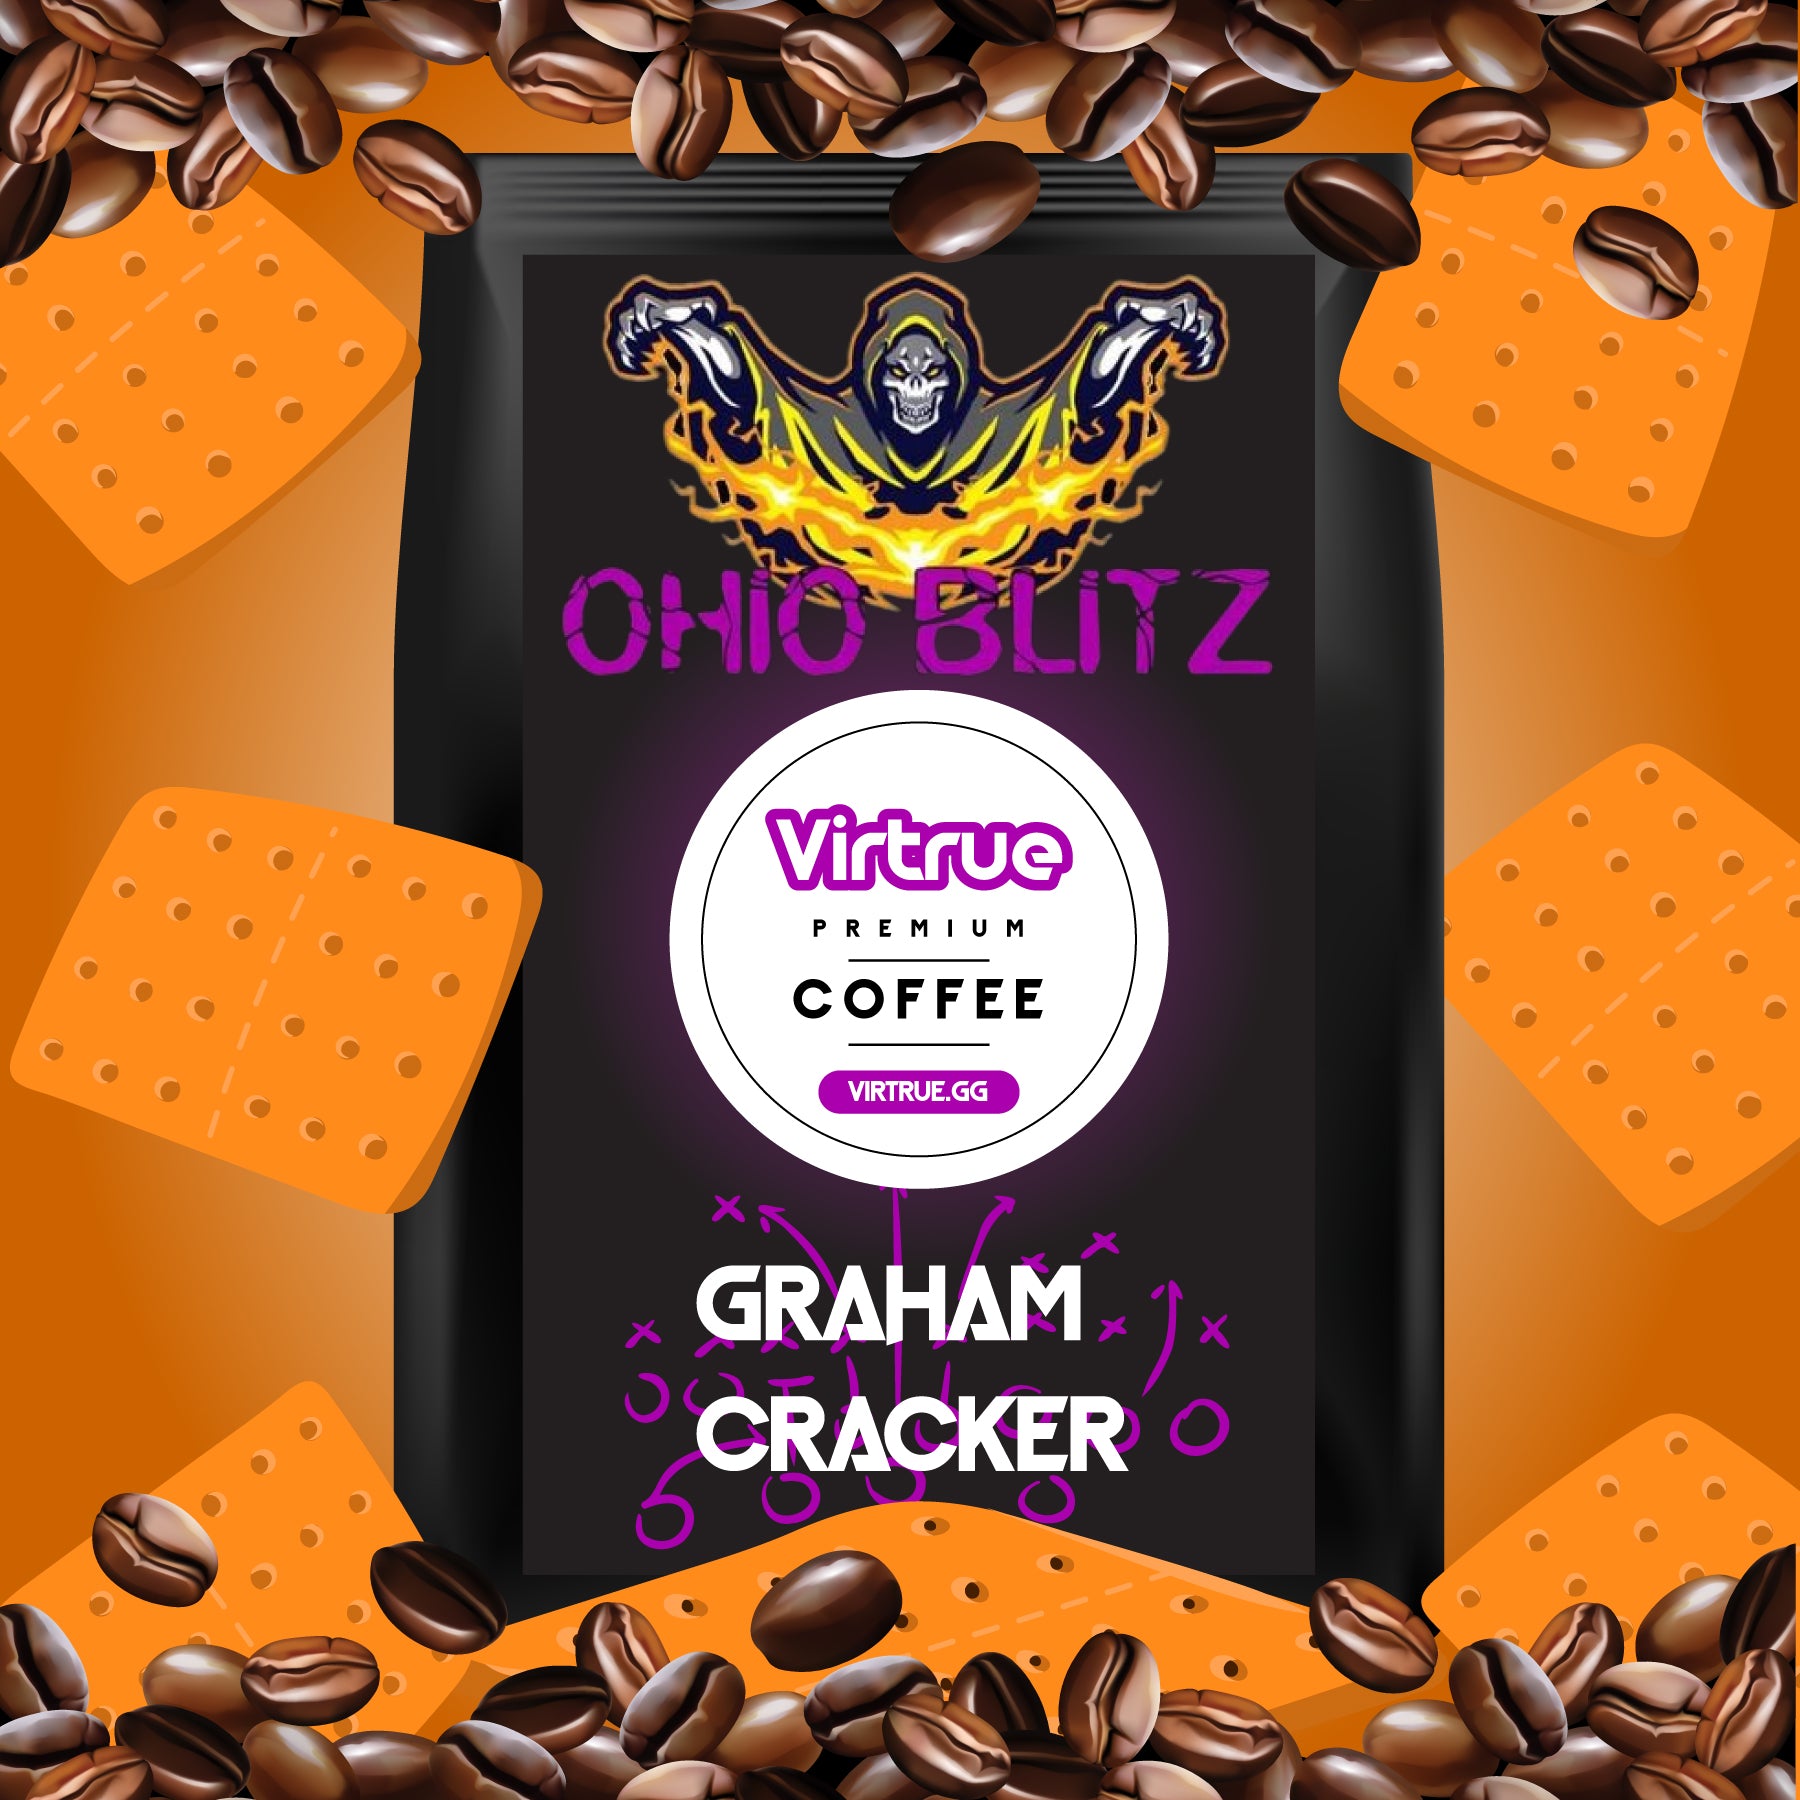 Ohio Blitz Flavored Coffee 16oz